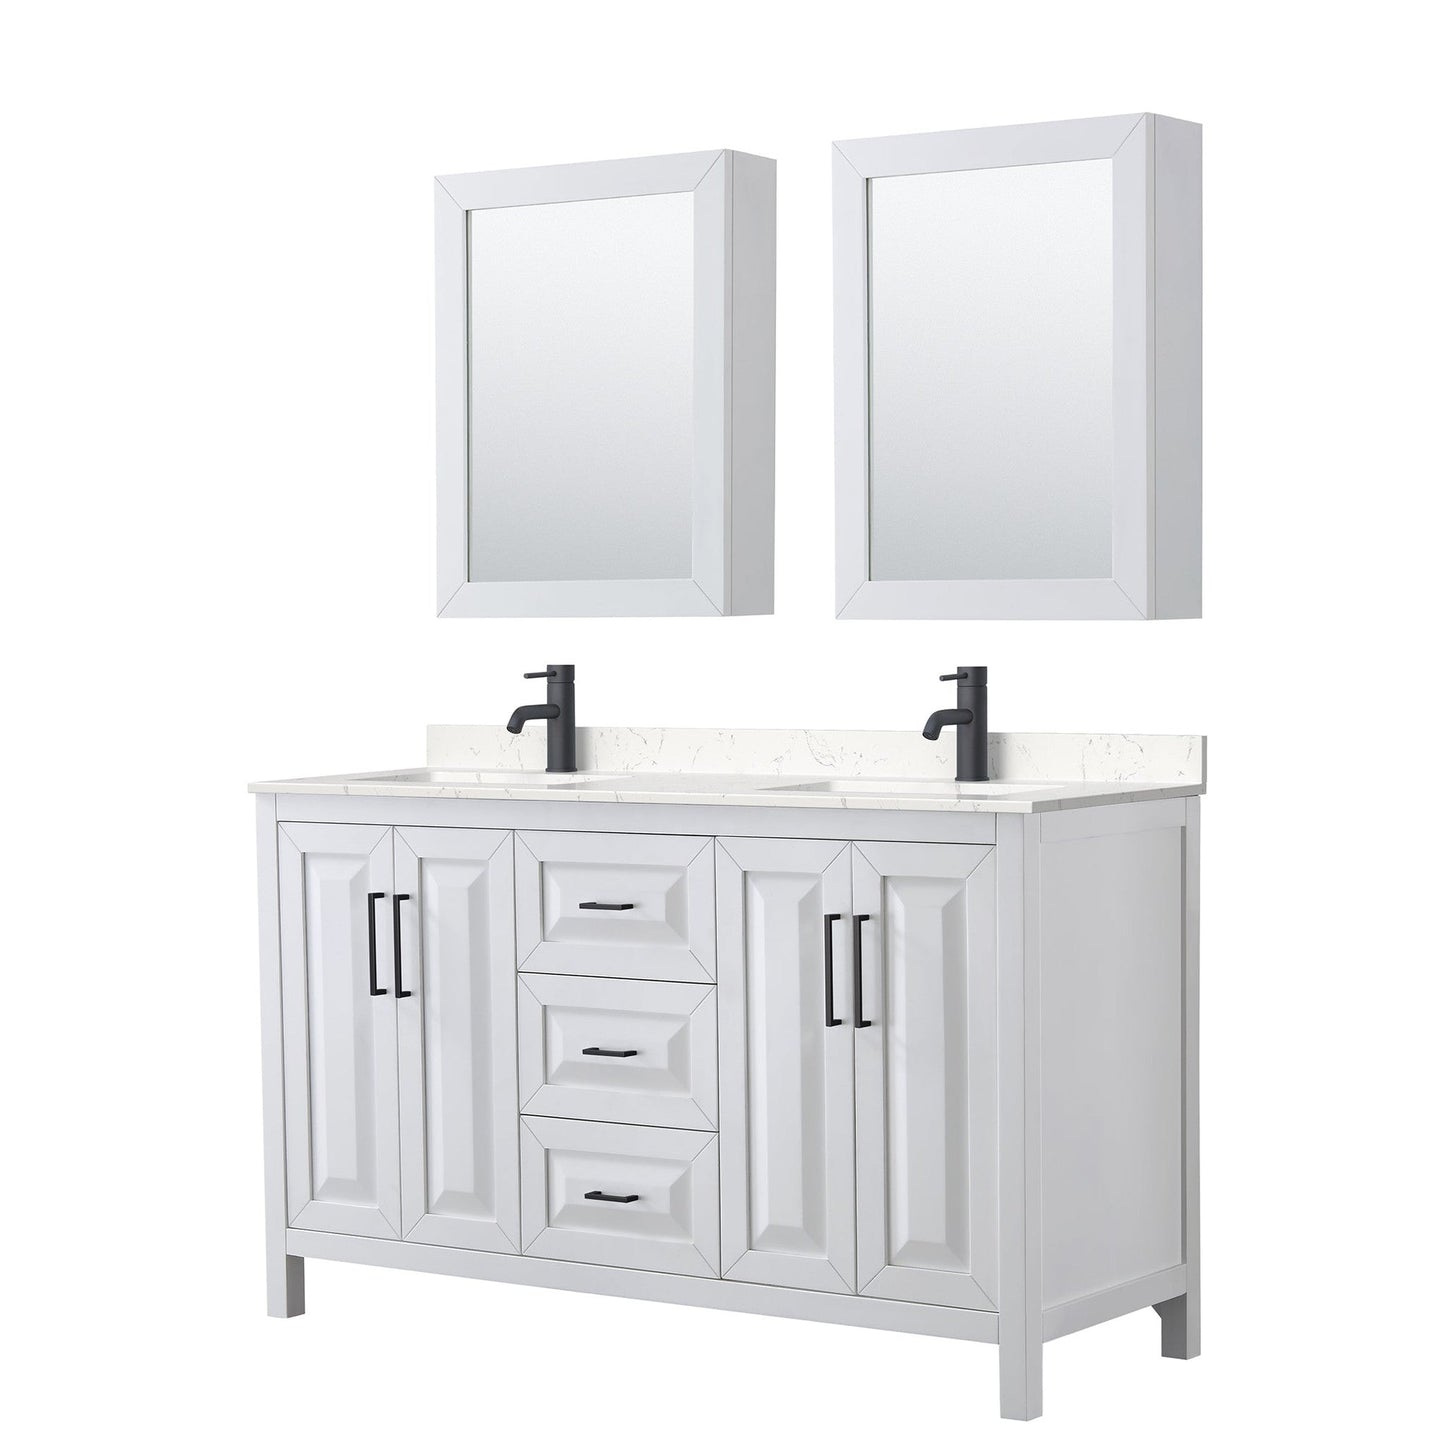 Daria 60" Double Bathroom Vanity in White, Carrara Cultured Marble Countertop, Undermount Square Sinks, Matte Black Trim, Medicine Cabinets